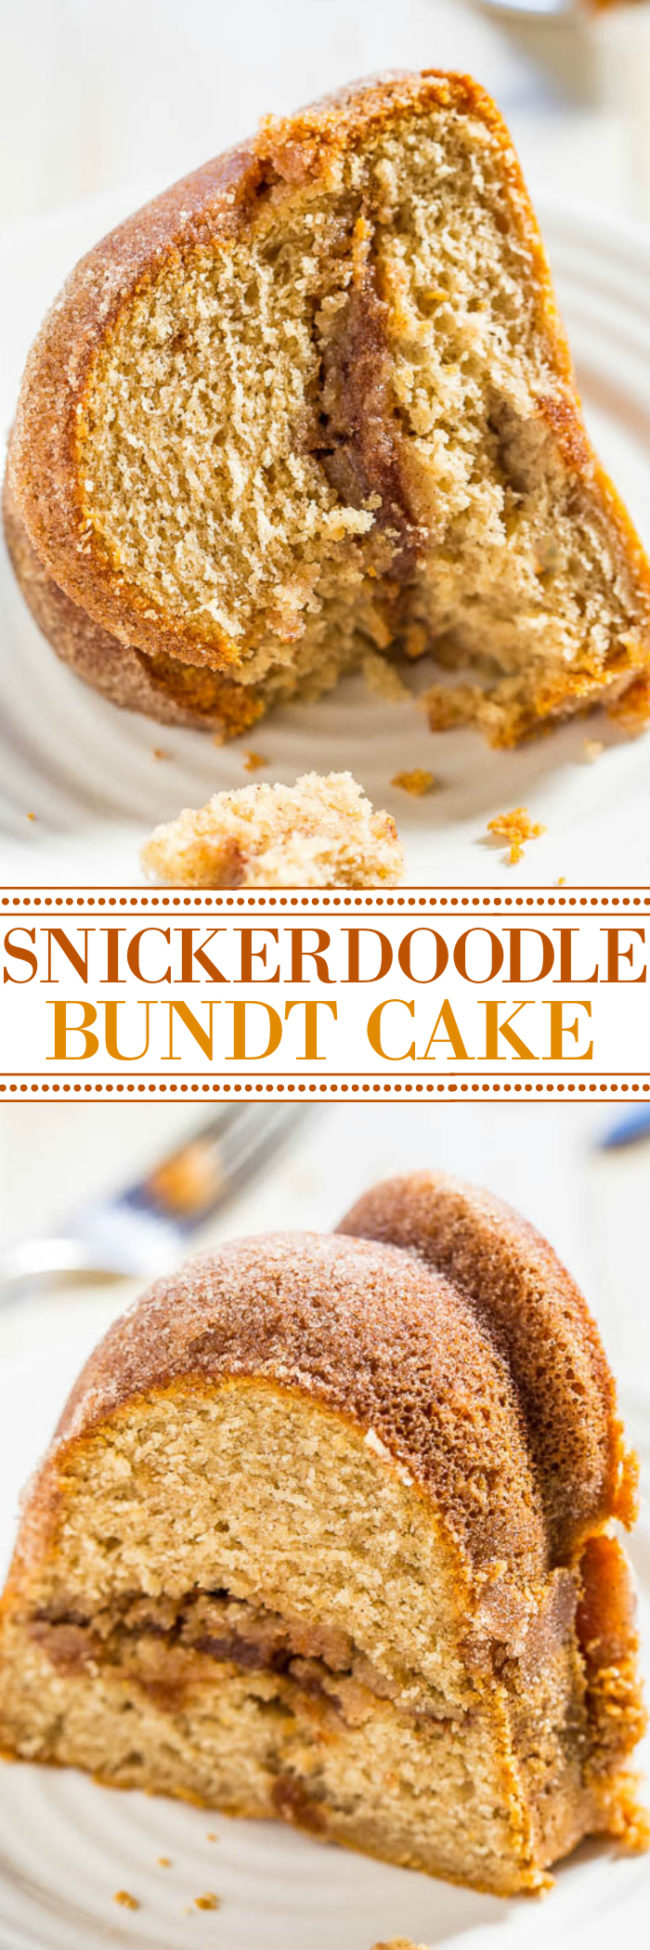 Cinnamon-Sugar Snickerdoodle Cake (Bundt Cake Recipe) - Averie Cooks